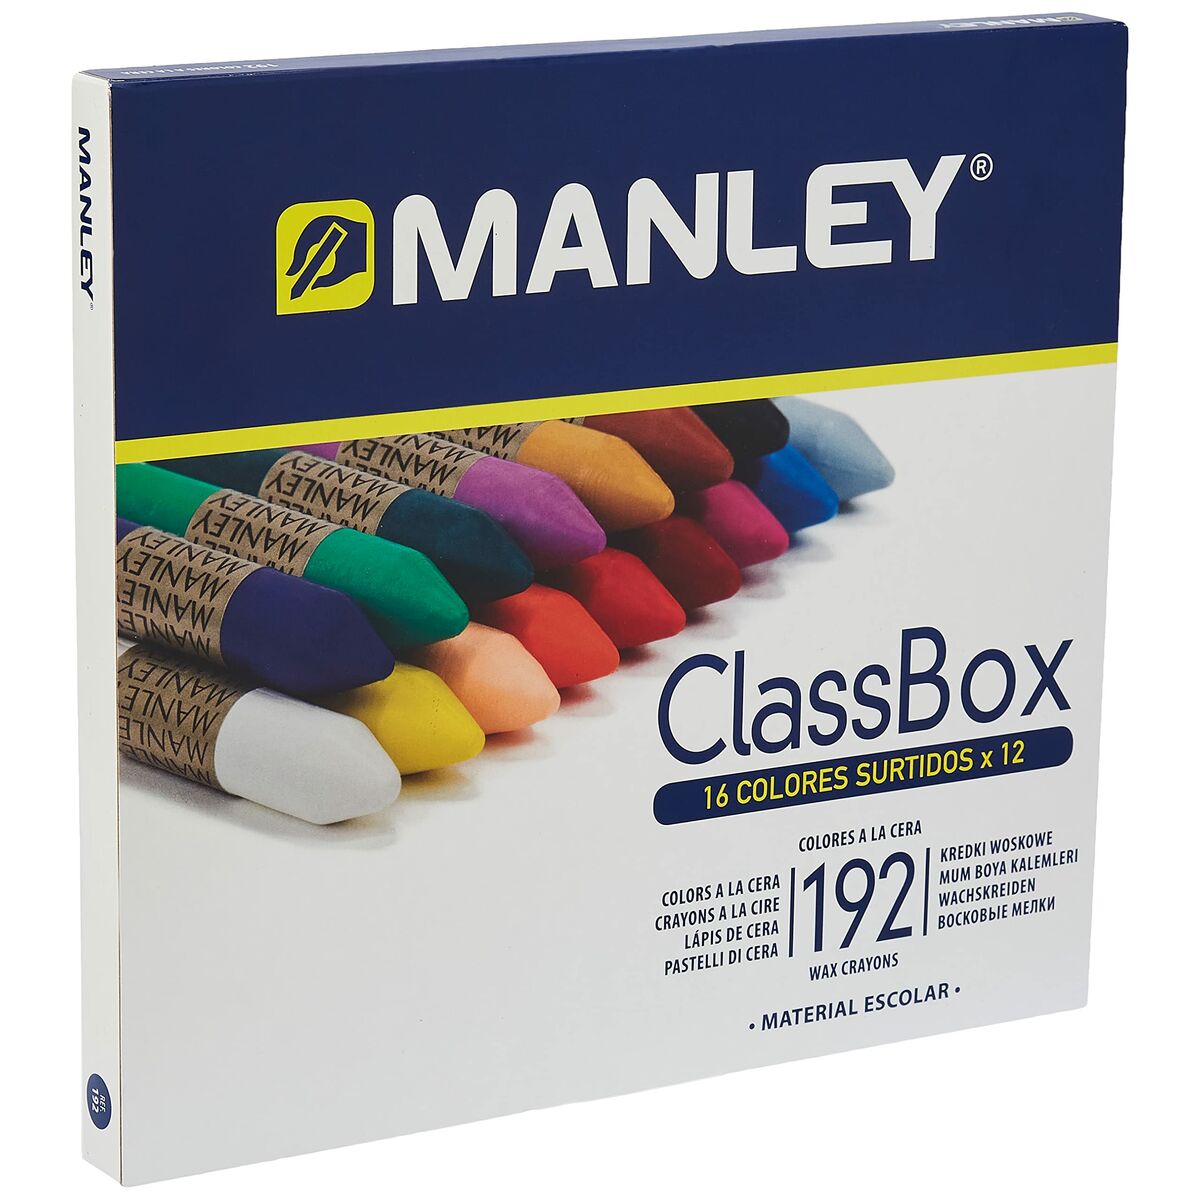 Coloured crayons Manley ClassBox 192 Pieces Multicolour